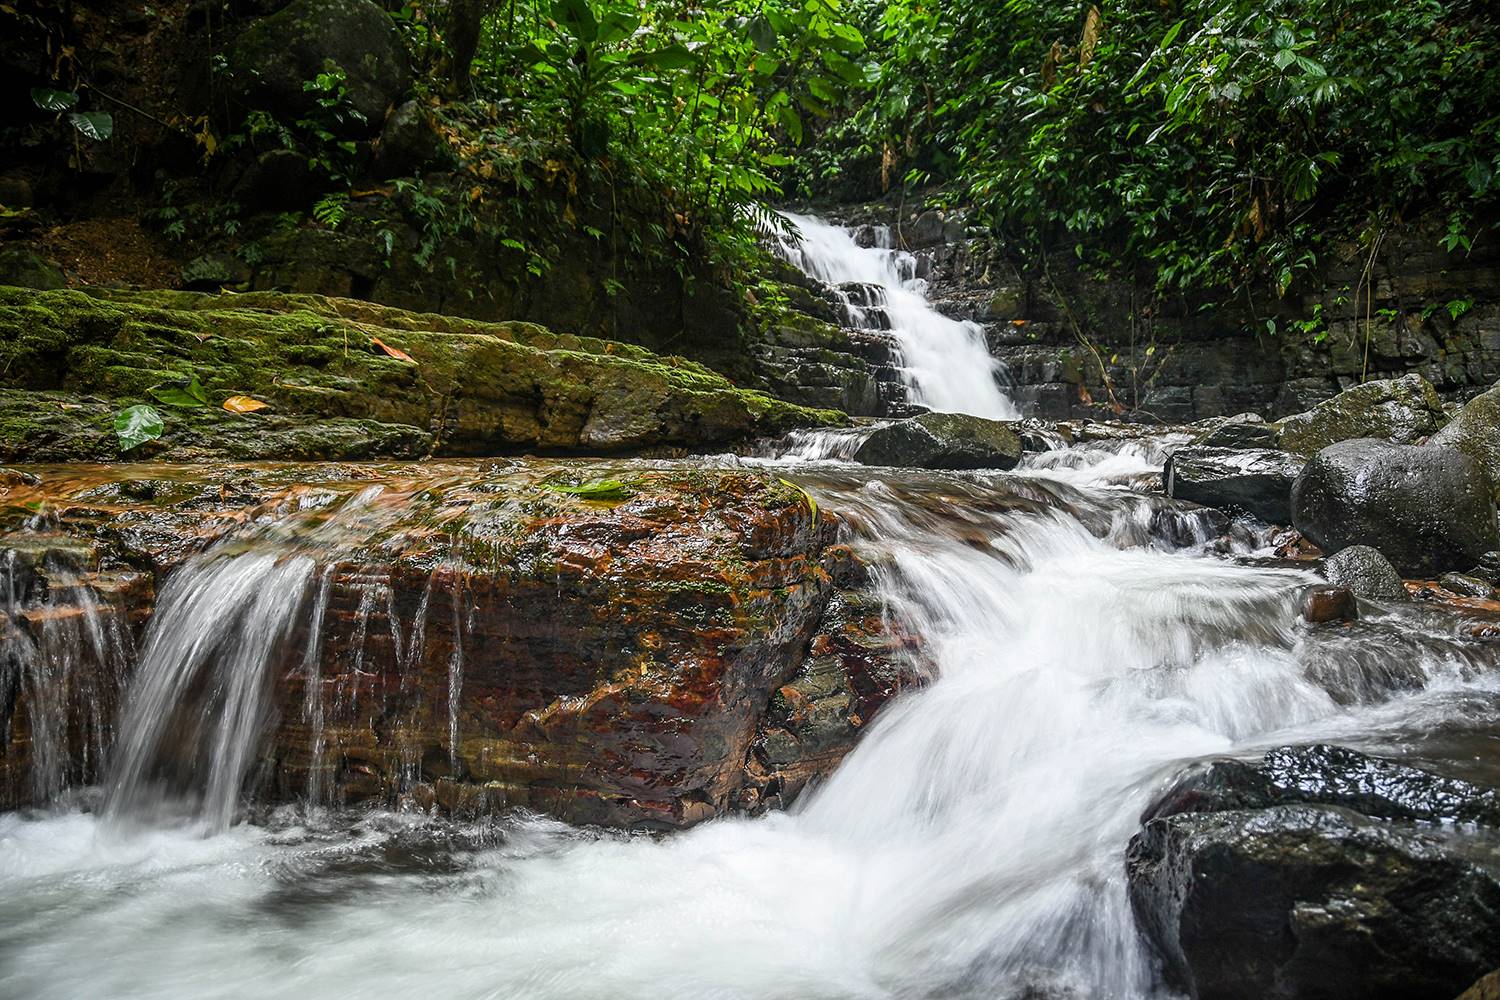 Oxygen Jungle Villas Private Waterfall on Site